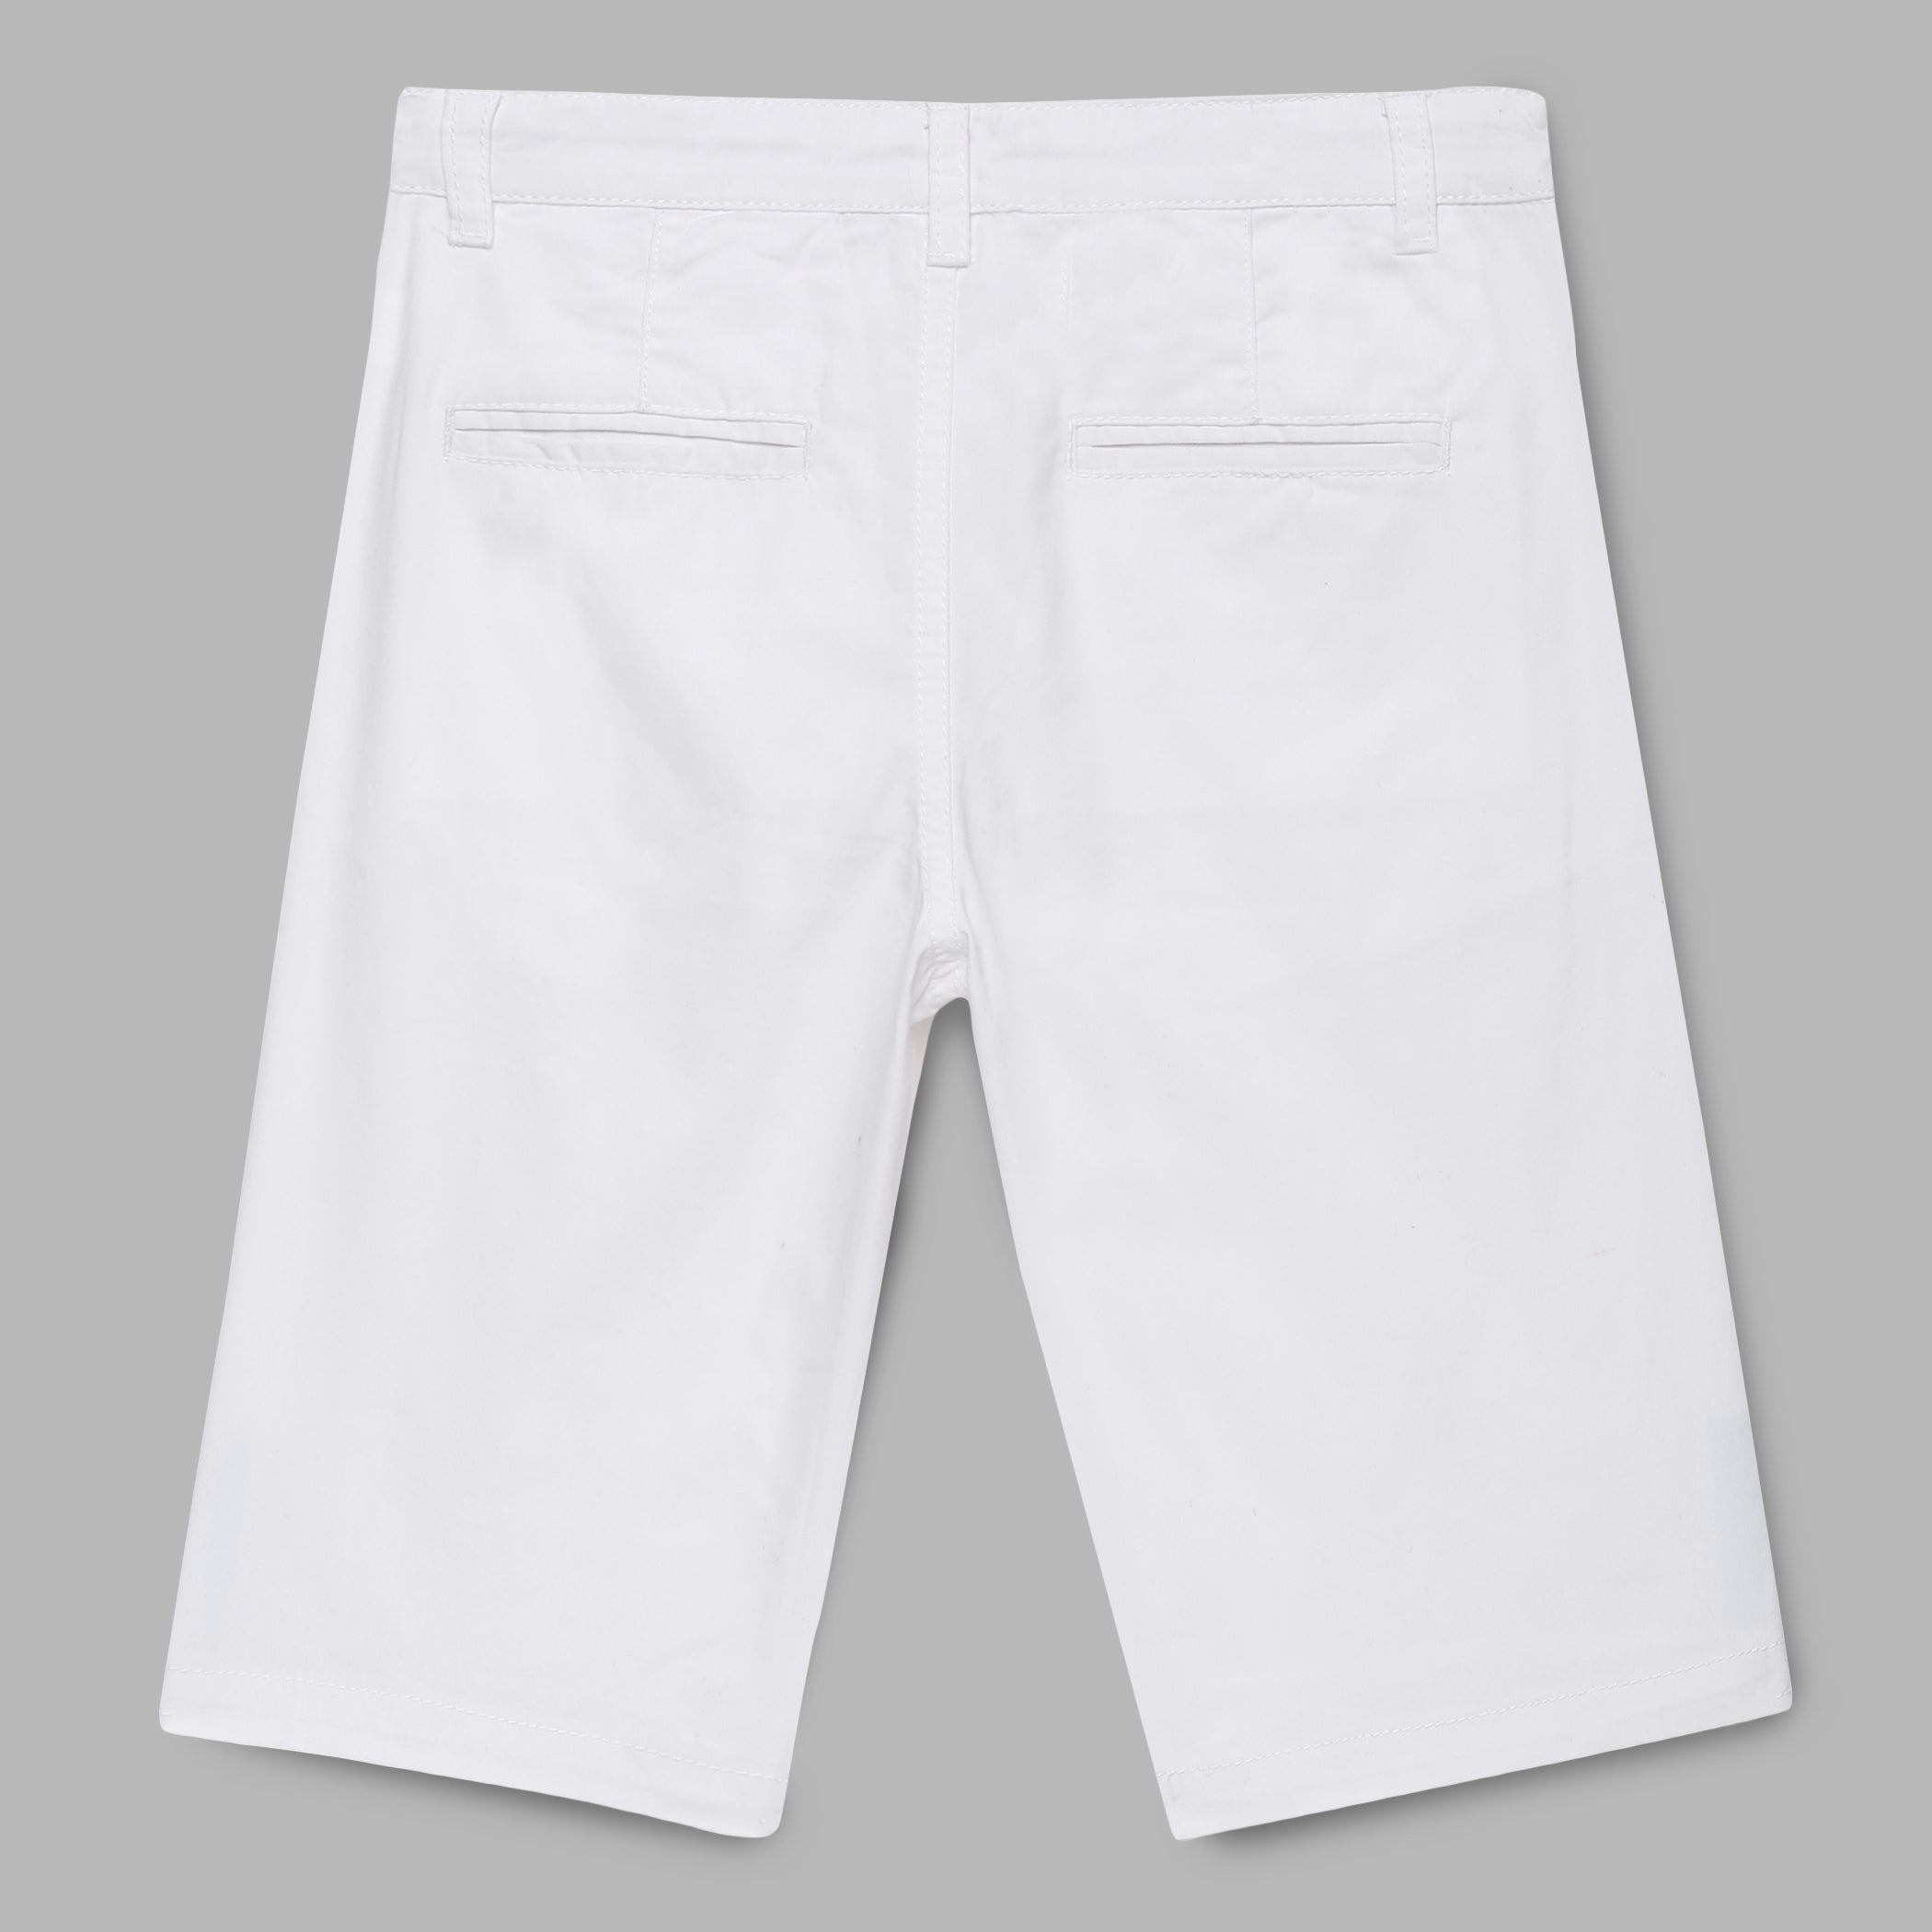 Kid Boys Solid White Twill Shorts